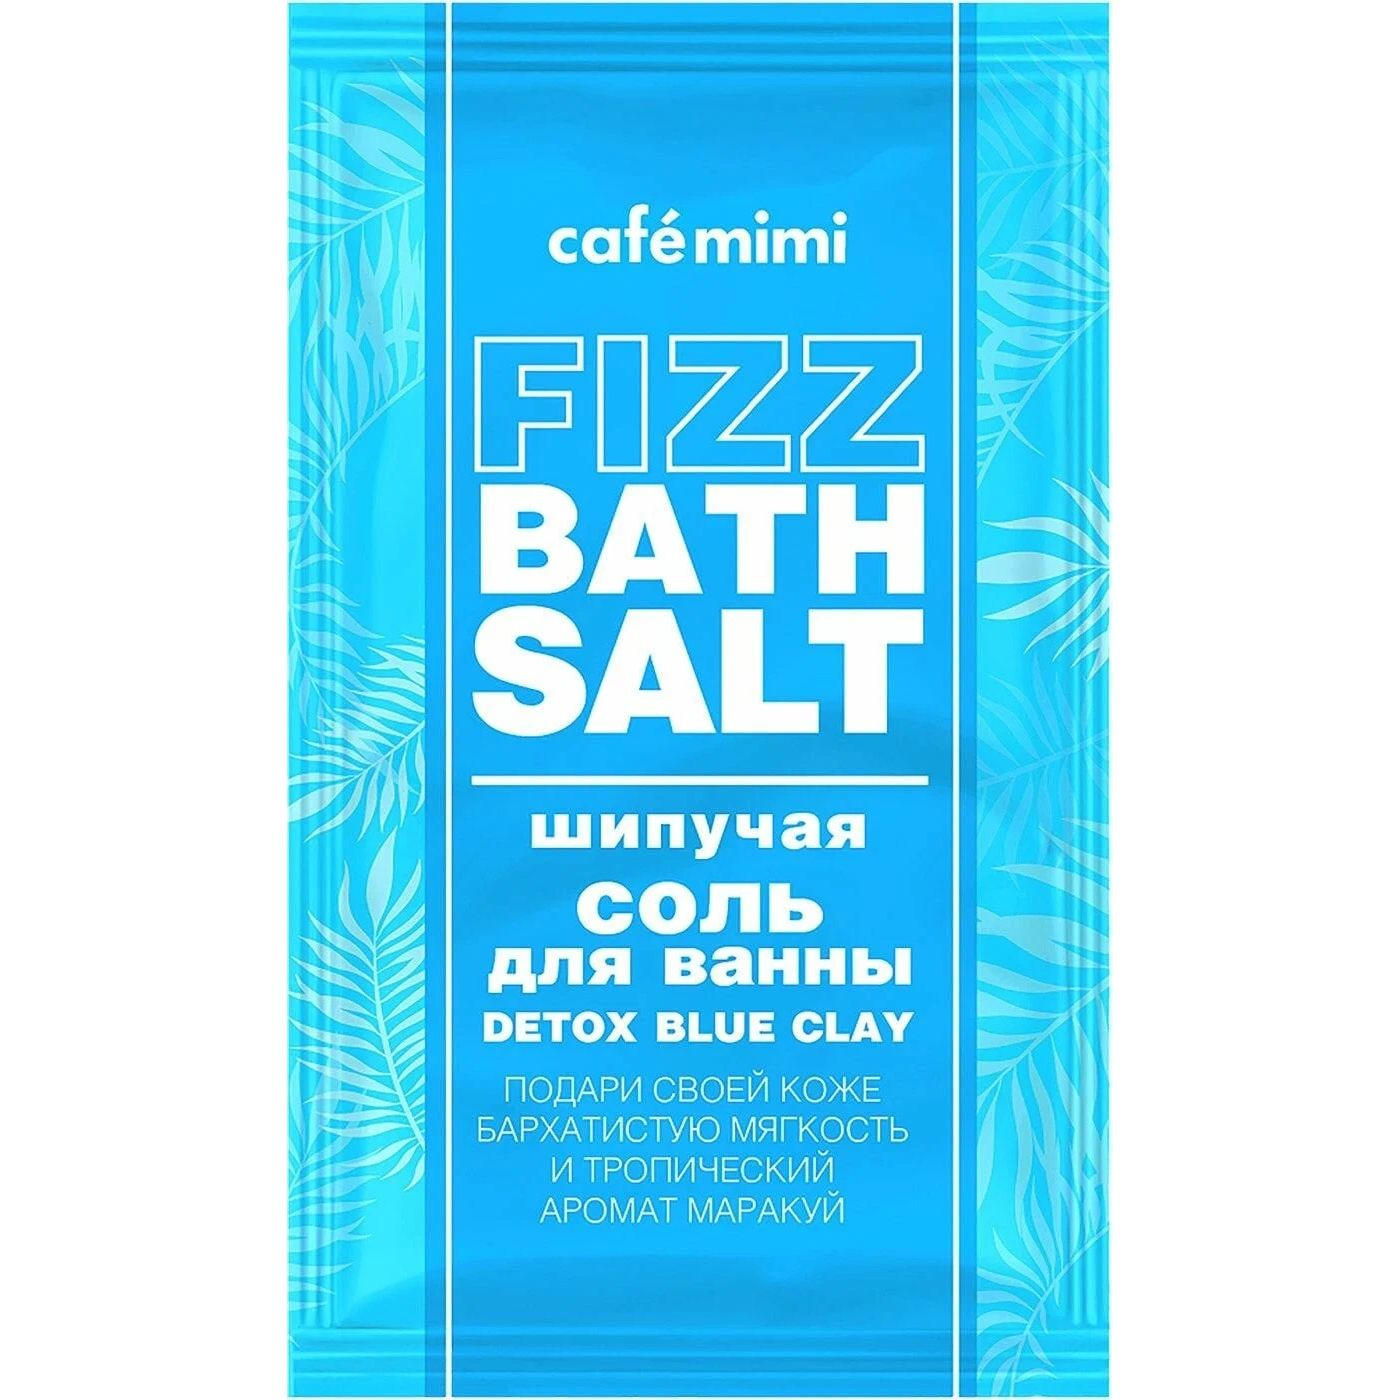 Соль для ванн Cafemimi Fizz Bath Salt Detox Blue Clay шипучая, 100 г biothal соль для ванн дикая роза bath salt wild rose 500